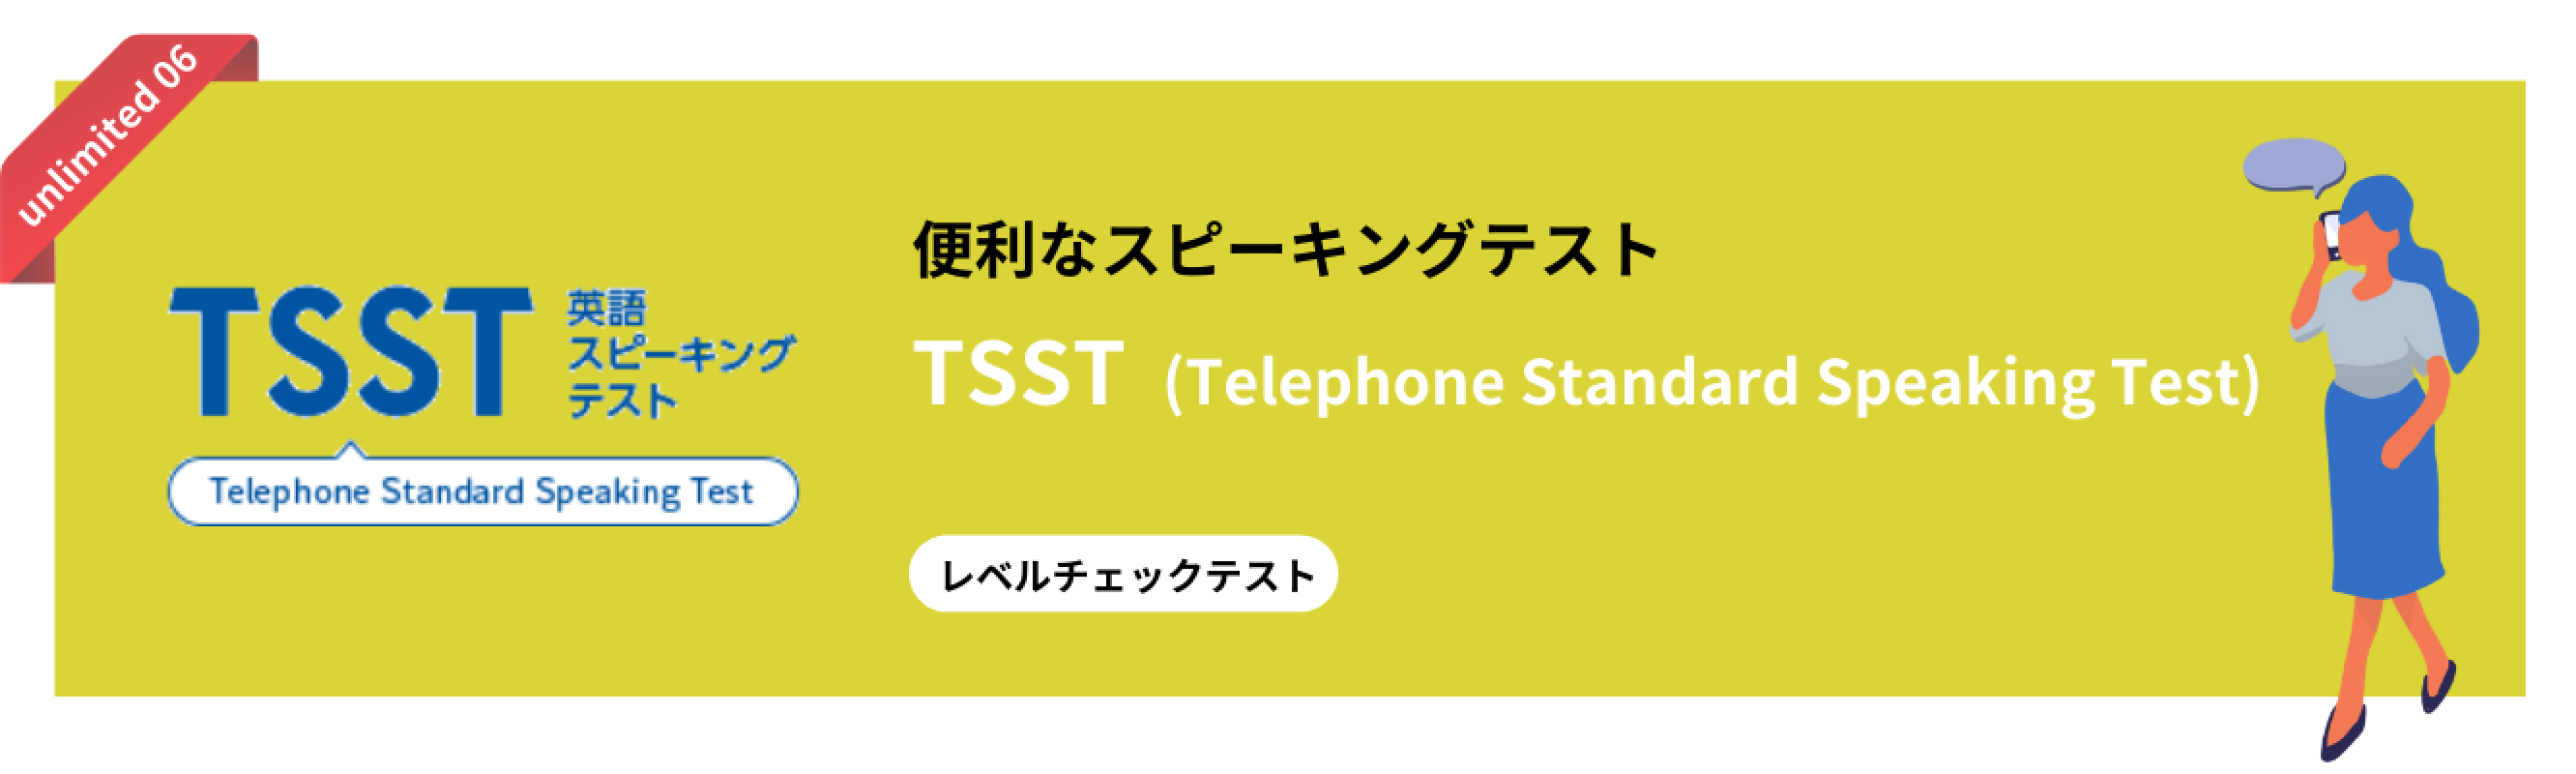 TSST 英語スピーキングテスト Telephone Standard Speaking Test 便利なスピーキングテスト TSST(Telephone Standard Speaking Test) レベルチェックテスト